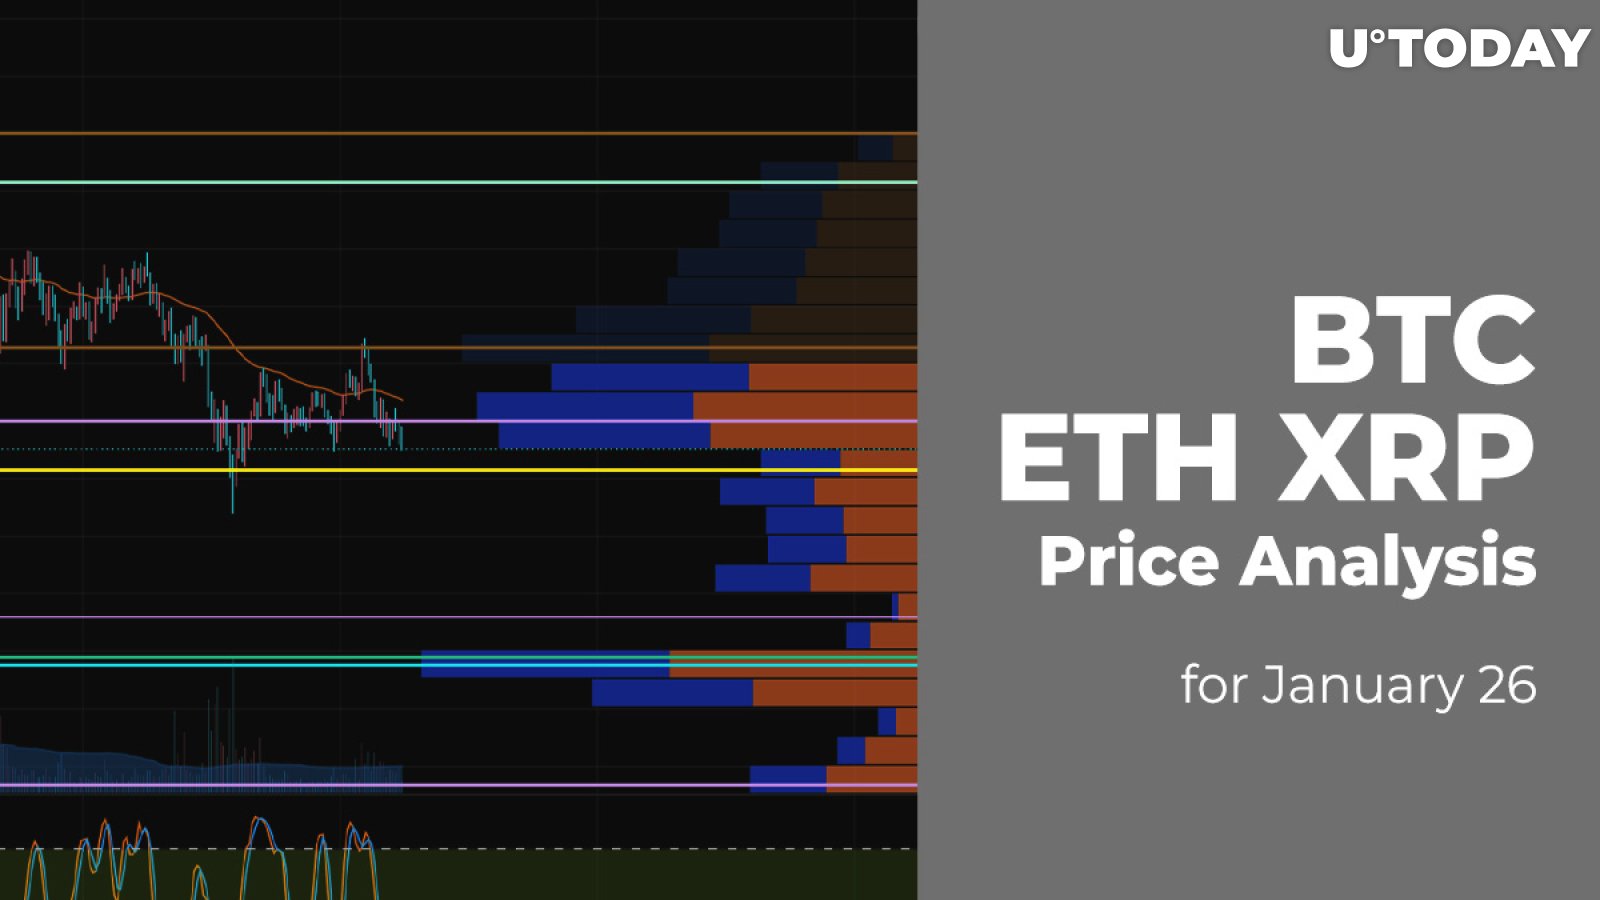 BTC, ETH and XRP Price Analysis for January 26